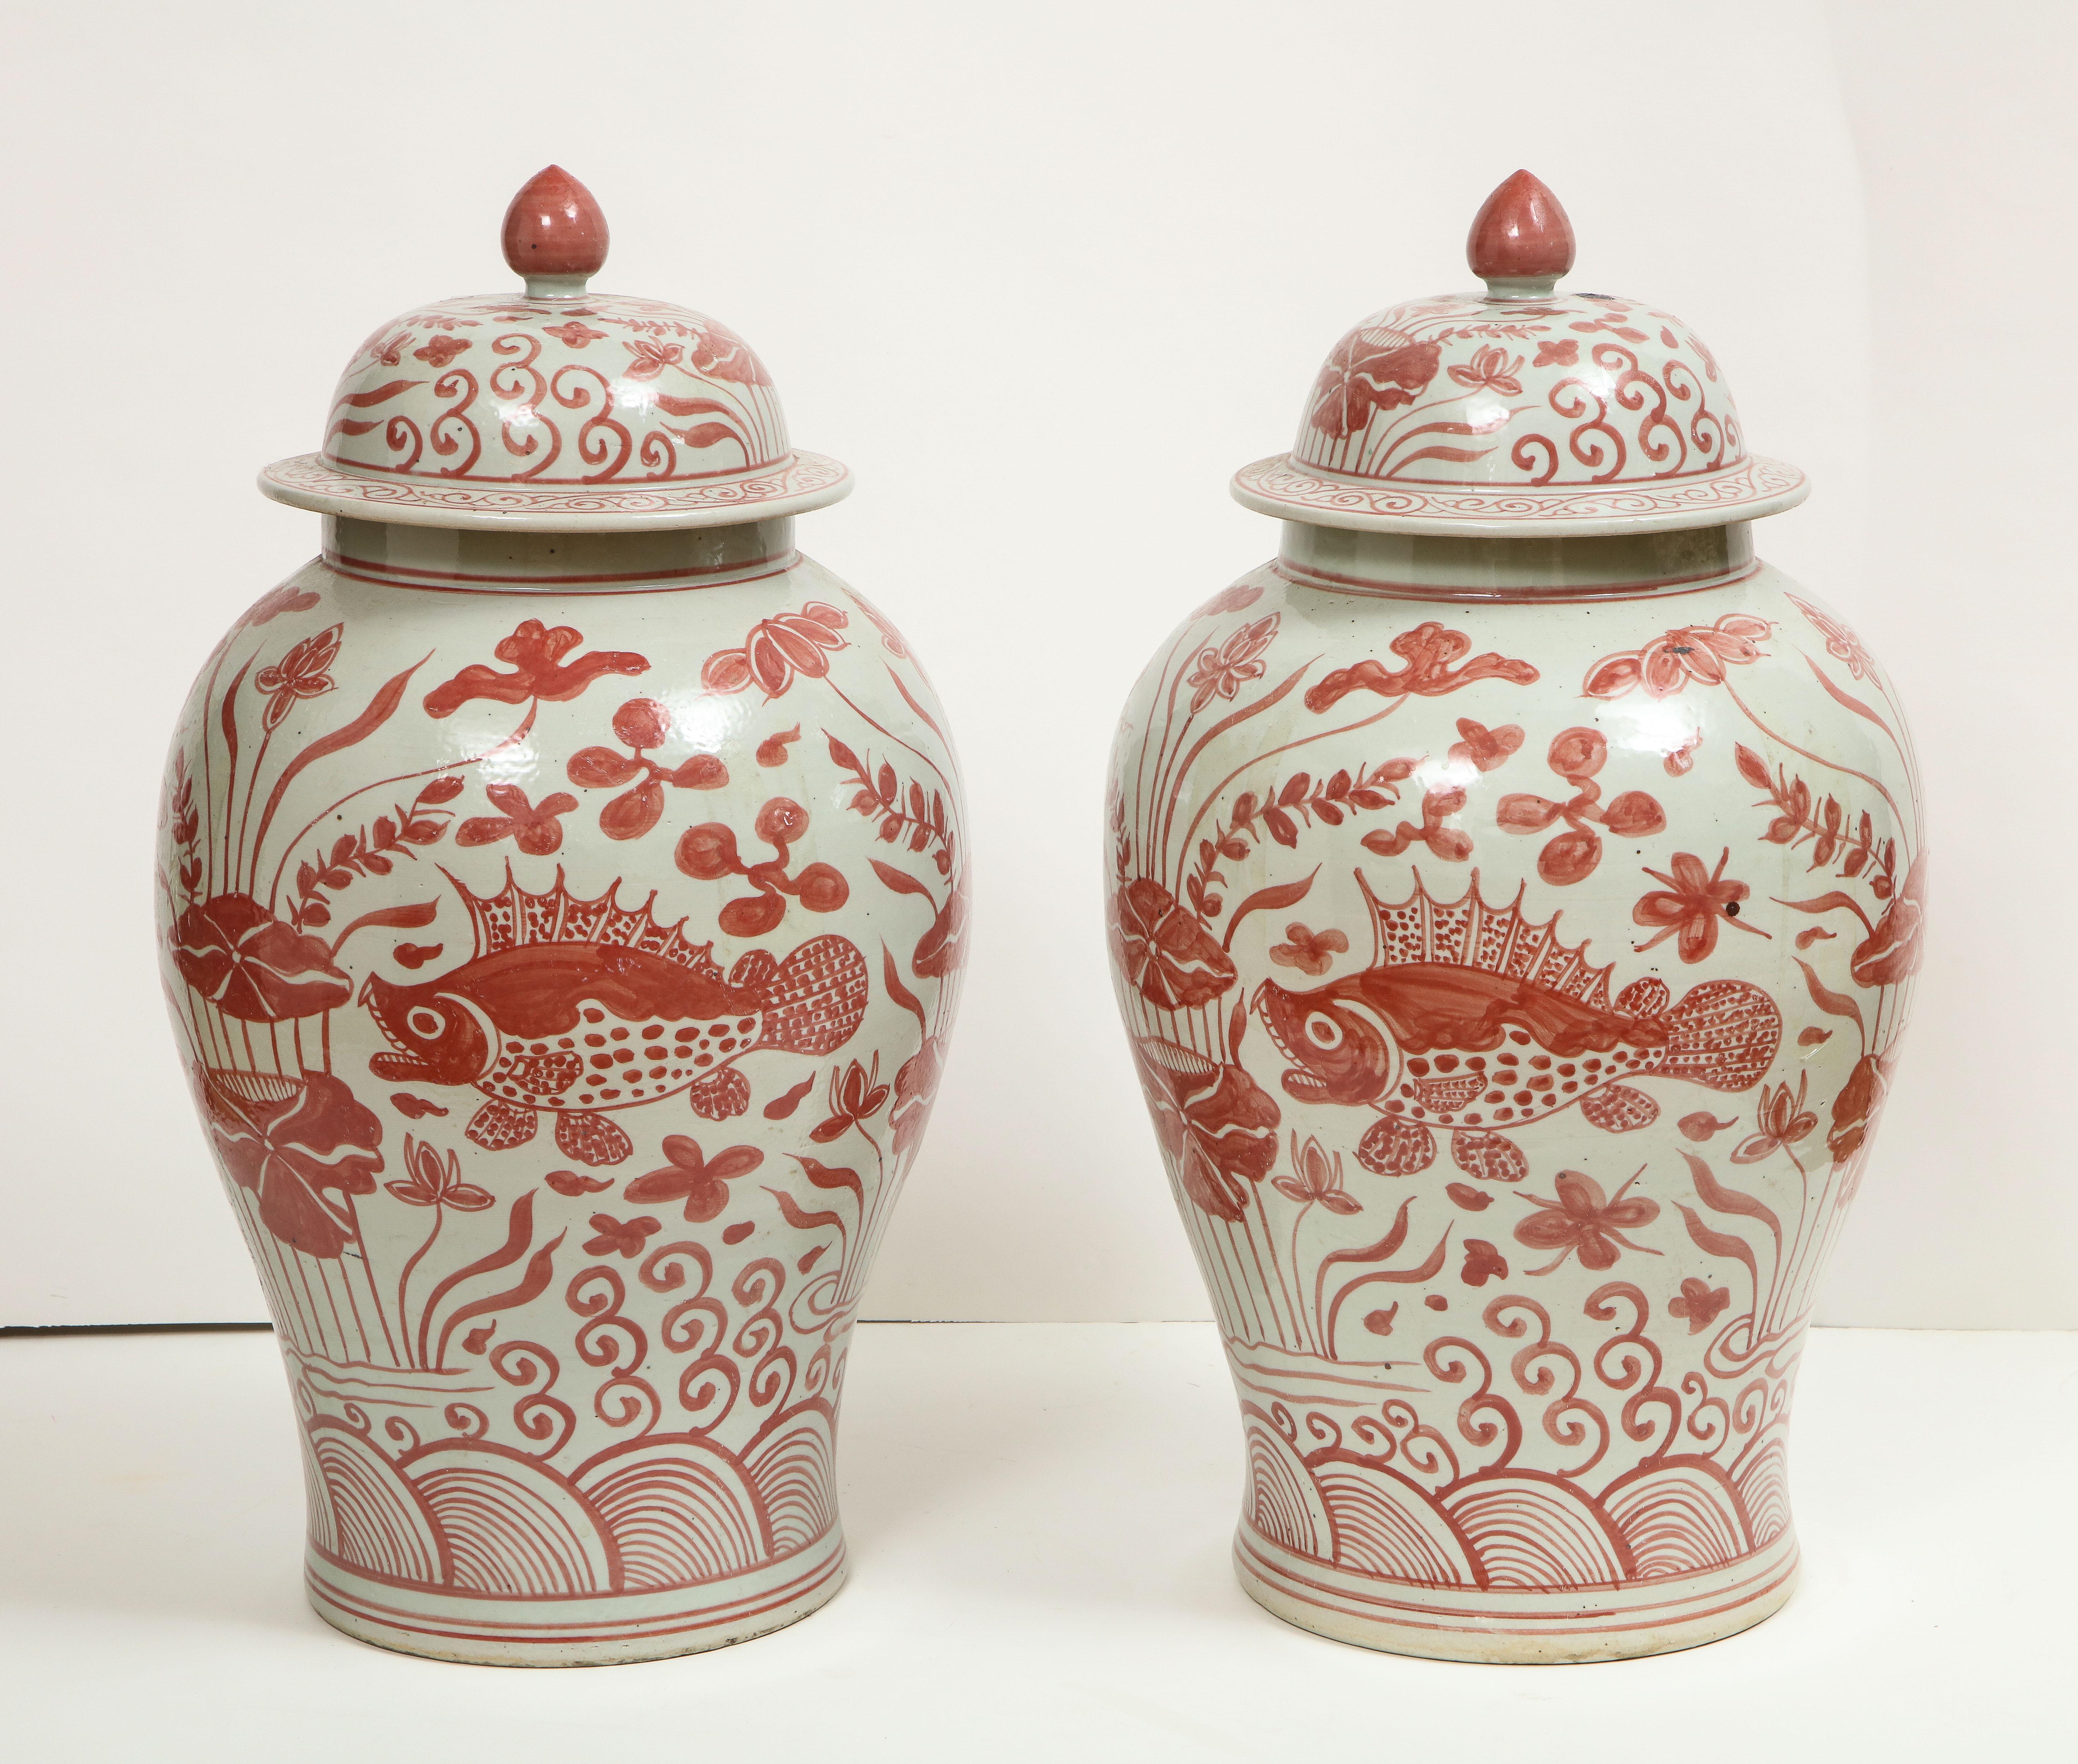 20th Century Pair of Pink and White Chinese Jars